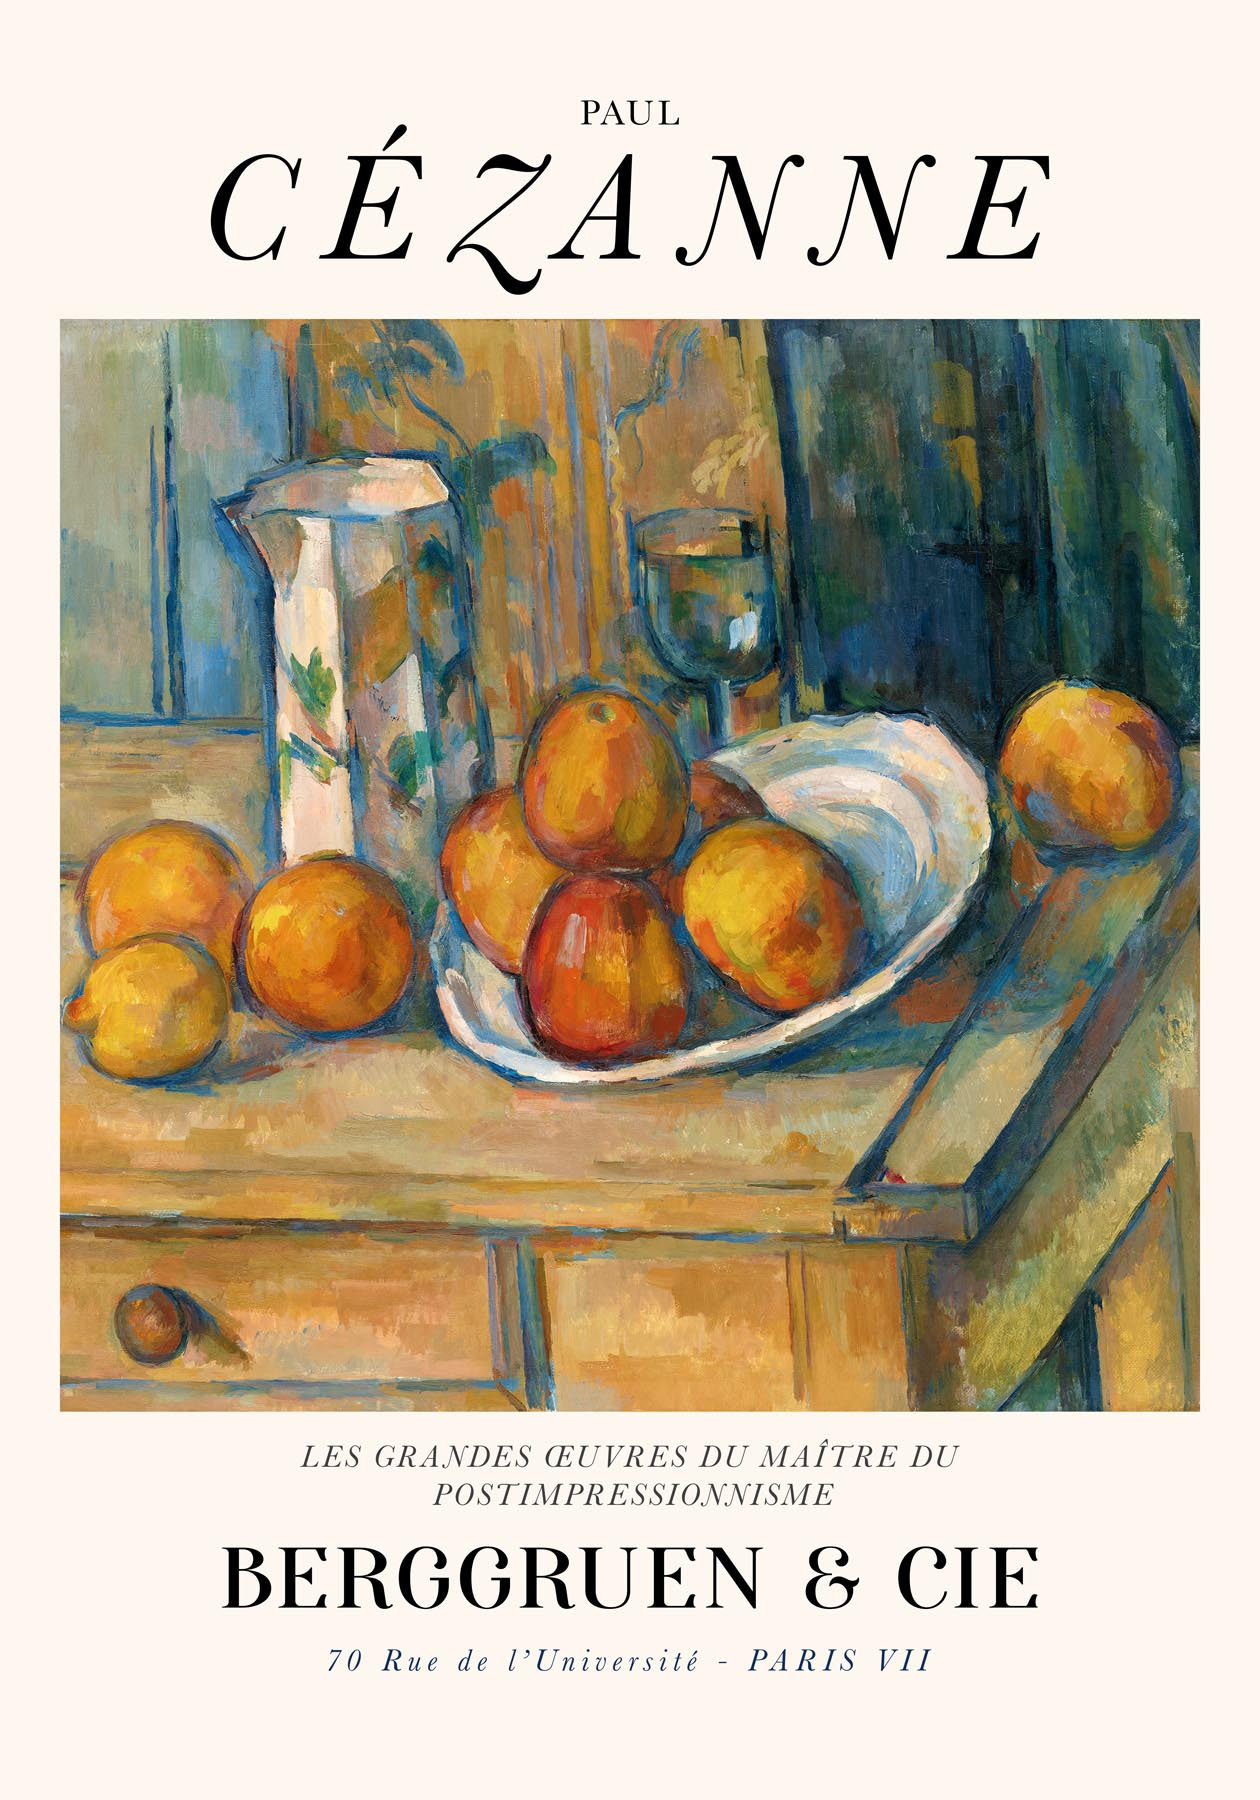 Still Life with Milk Jug Art Exhibition Paul Cezanne Exhibition Poster